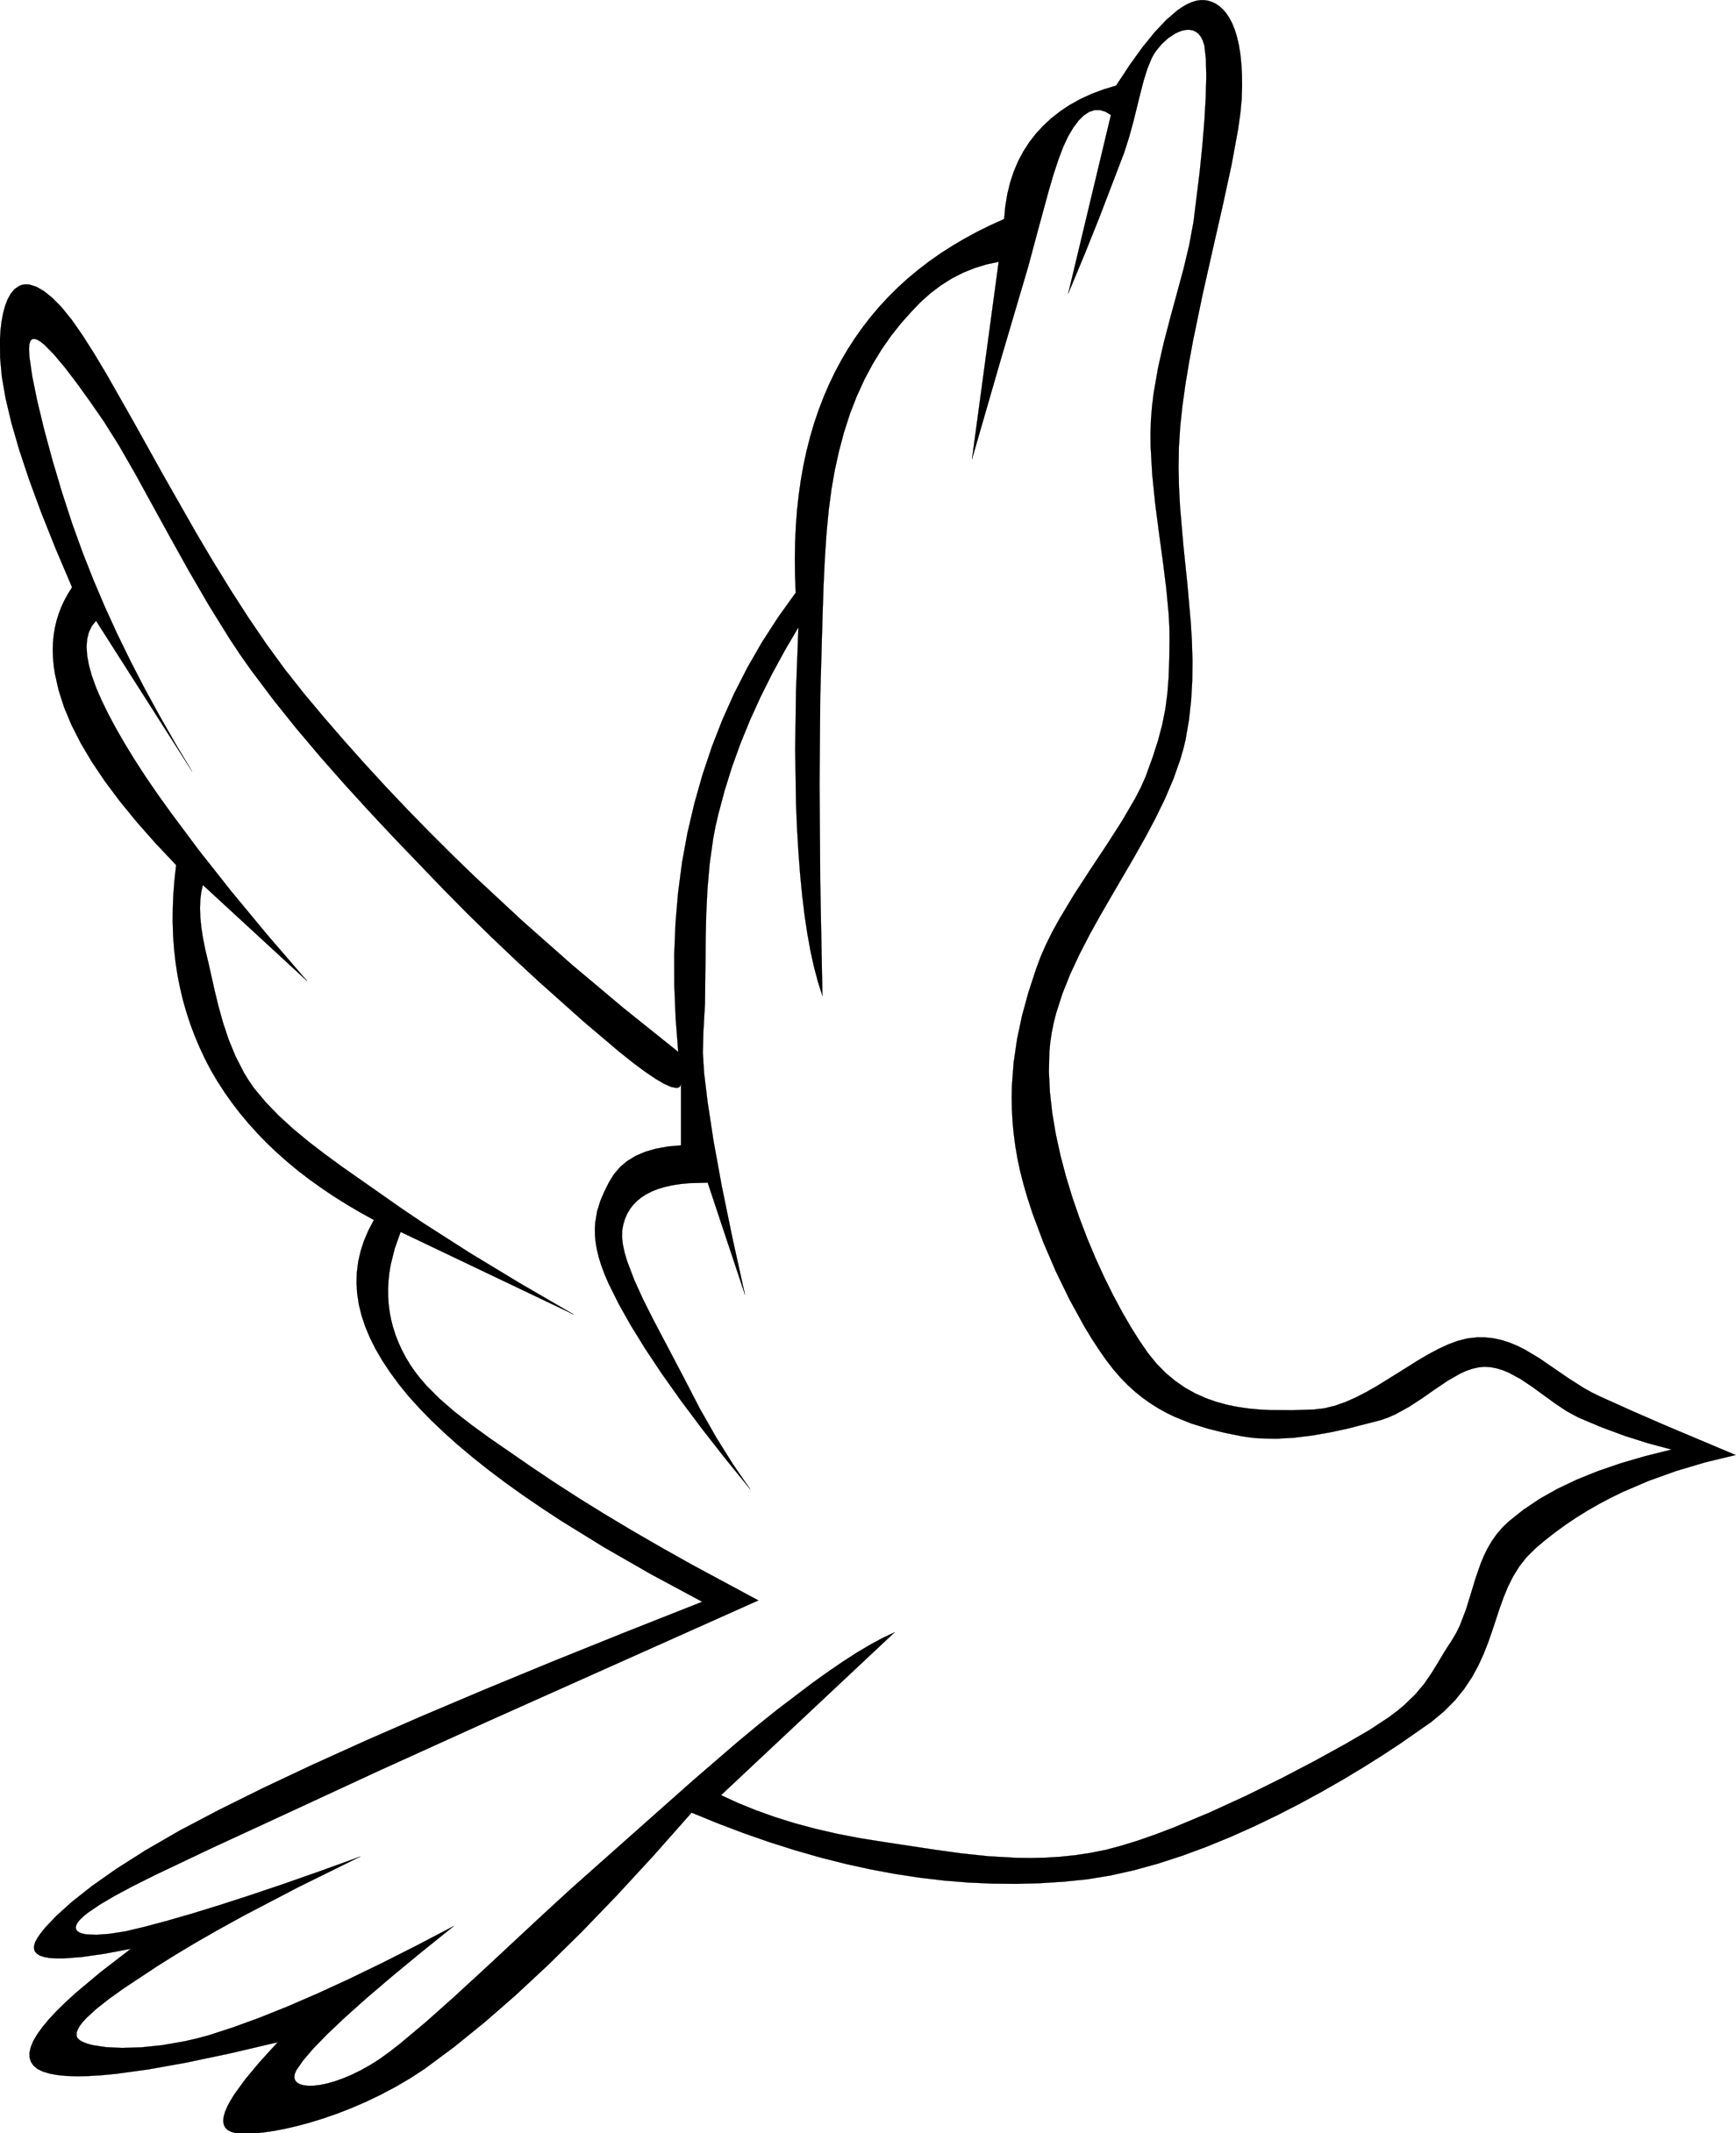 Black and White Dove Logo - Clip Art: peace dove 1 94 black white line art ... - ClipArt Best ...